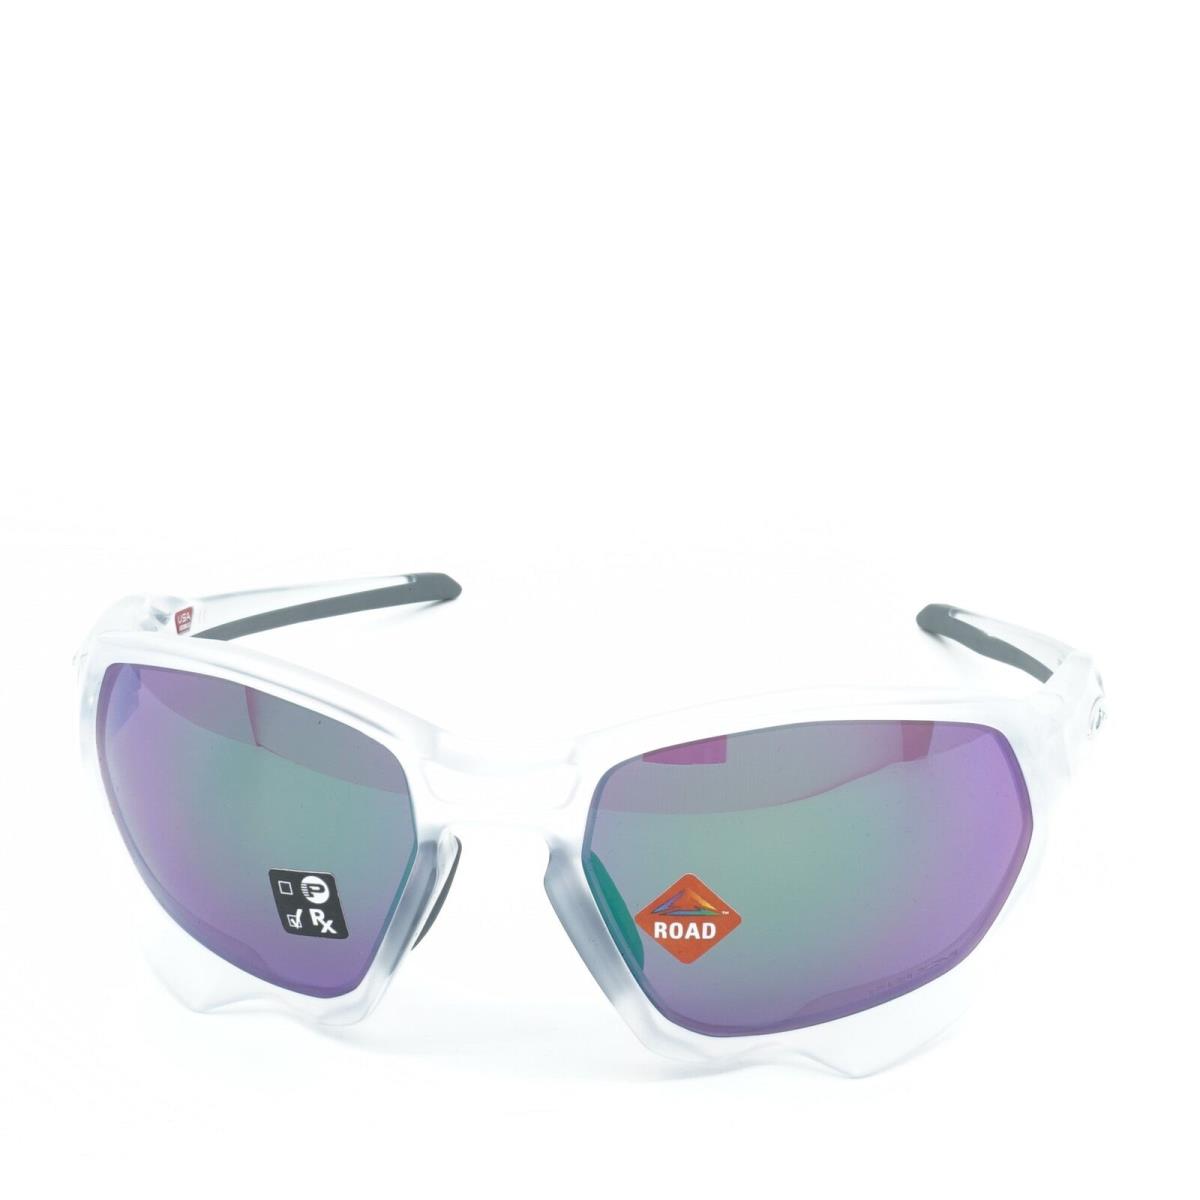 OO9019A-18 Mens Oakley Plazma Global Fit Sunglasses - Frame: Matte Clear